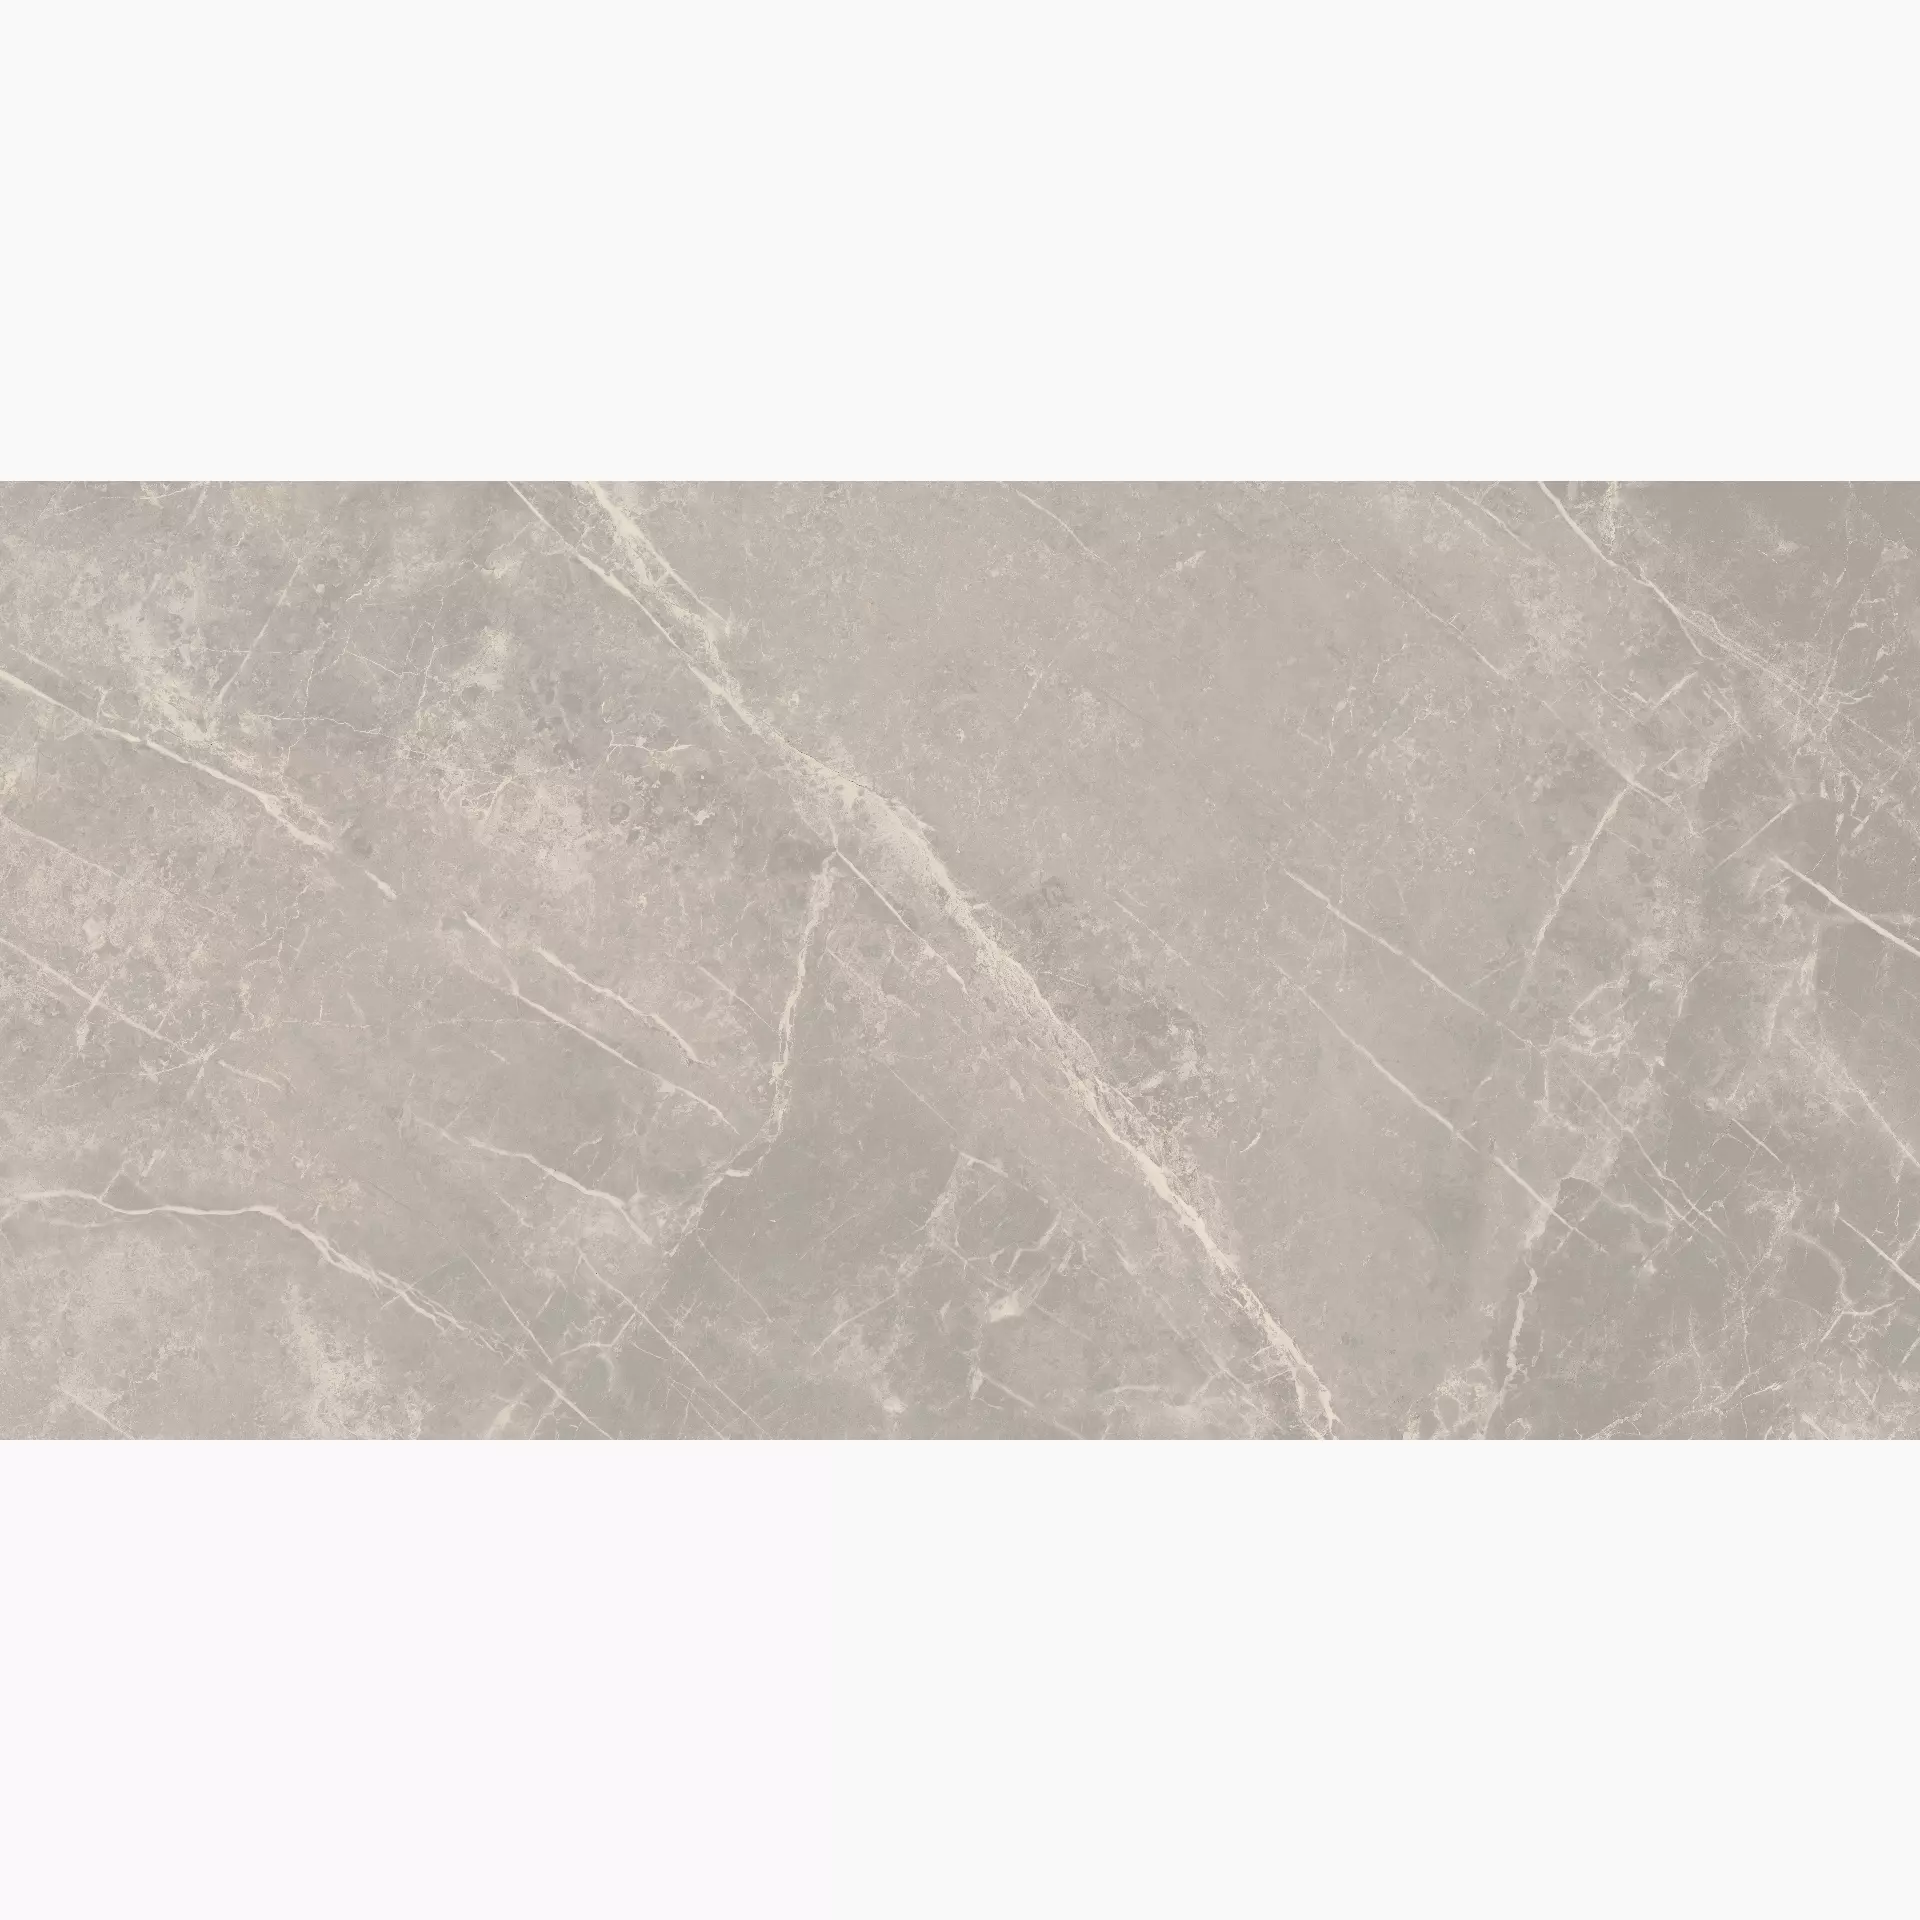 Florim Elemental Stone Of Cerim Grey Dolomia Naturale – Matt 766526 60x120cm rectified 9mm